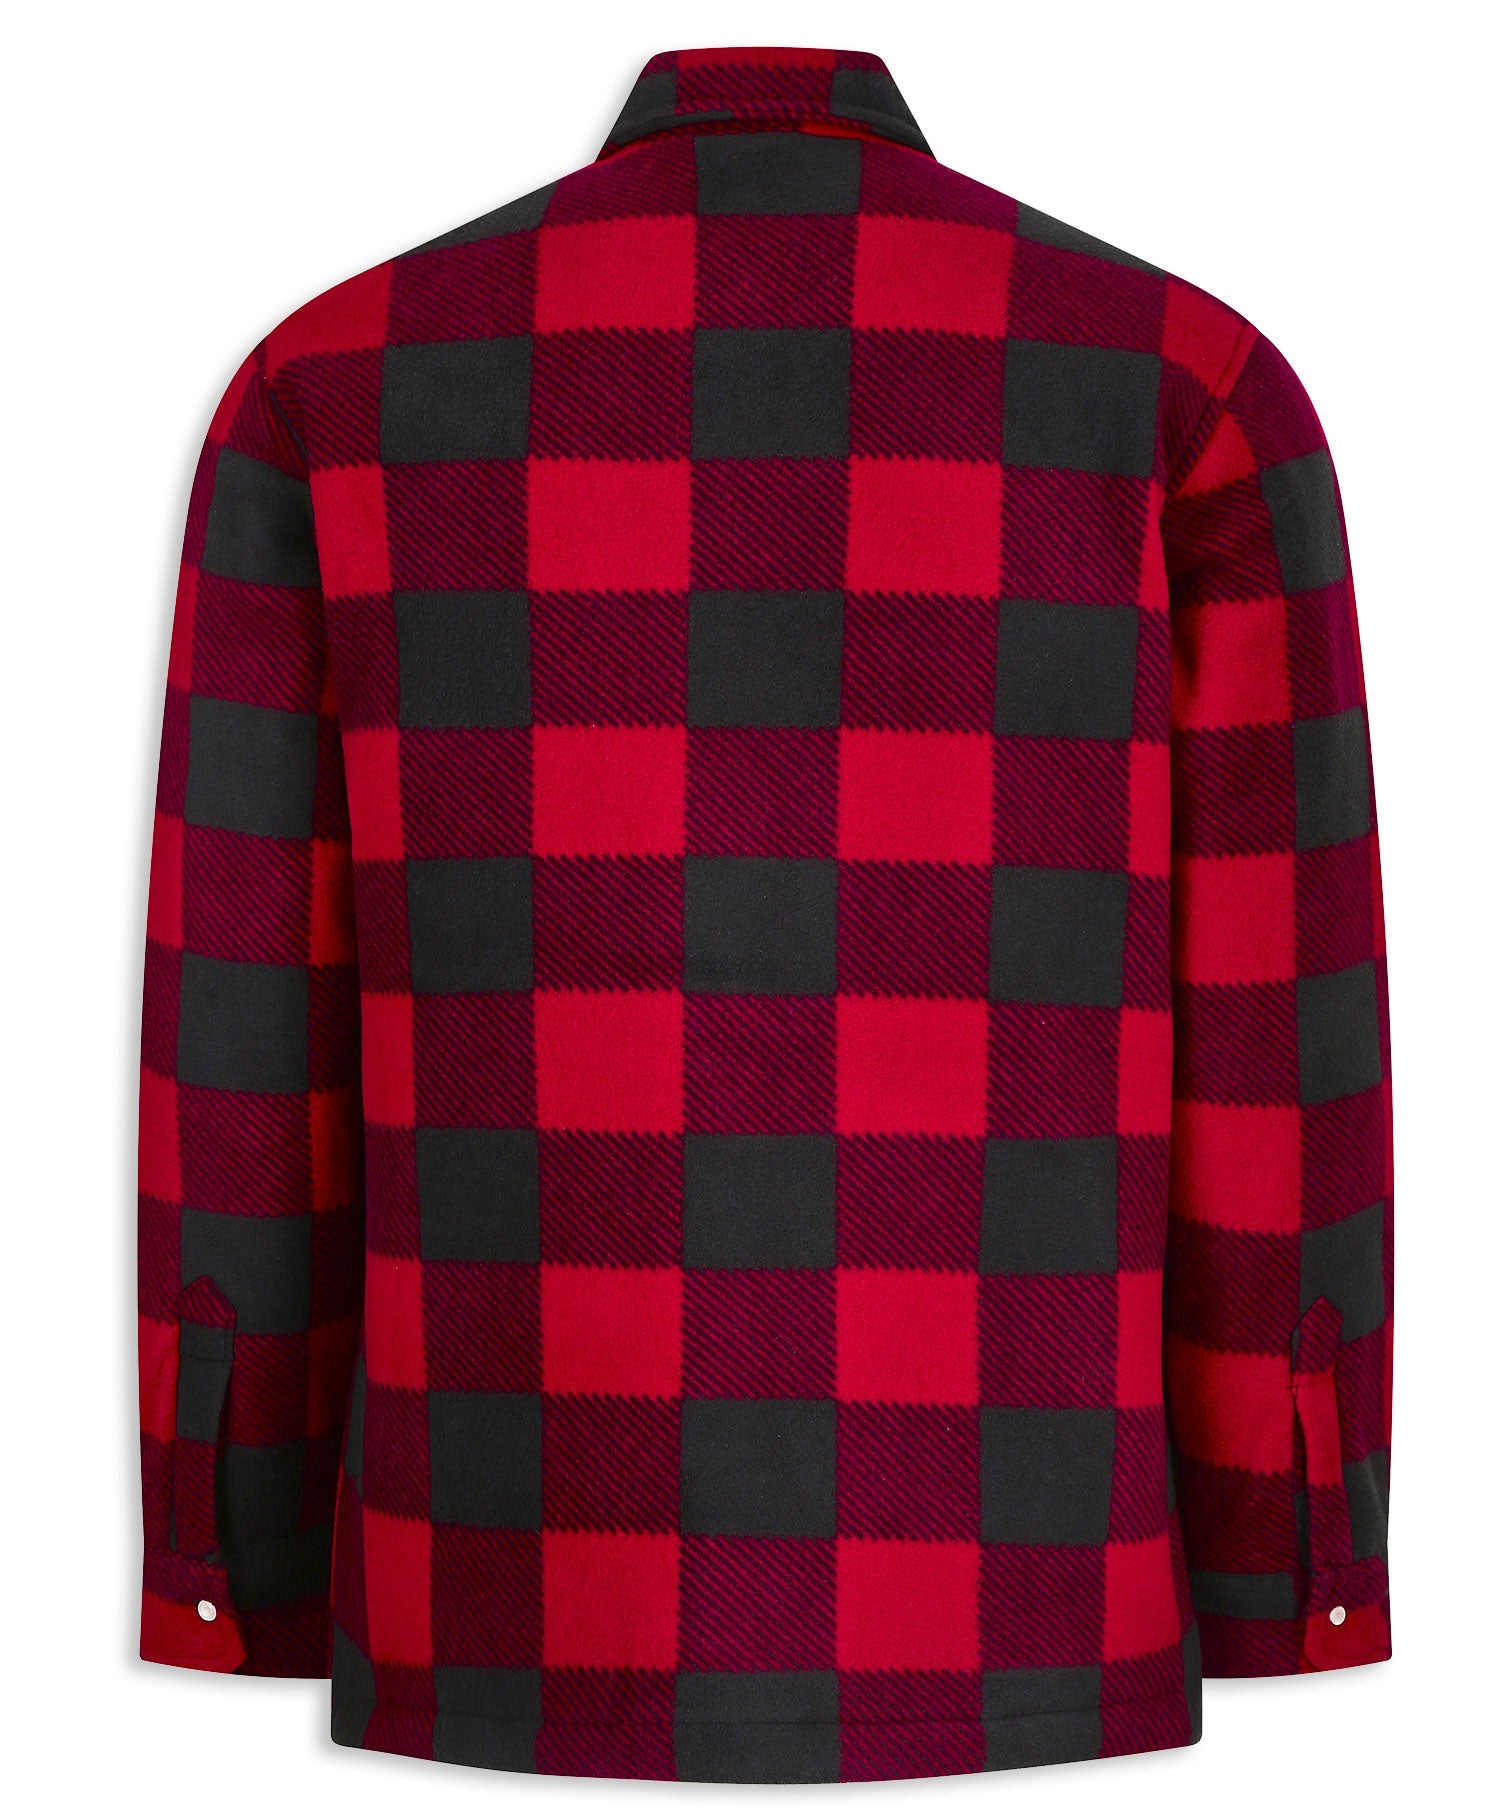 Back red black check lumberjack shirt 